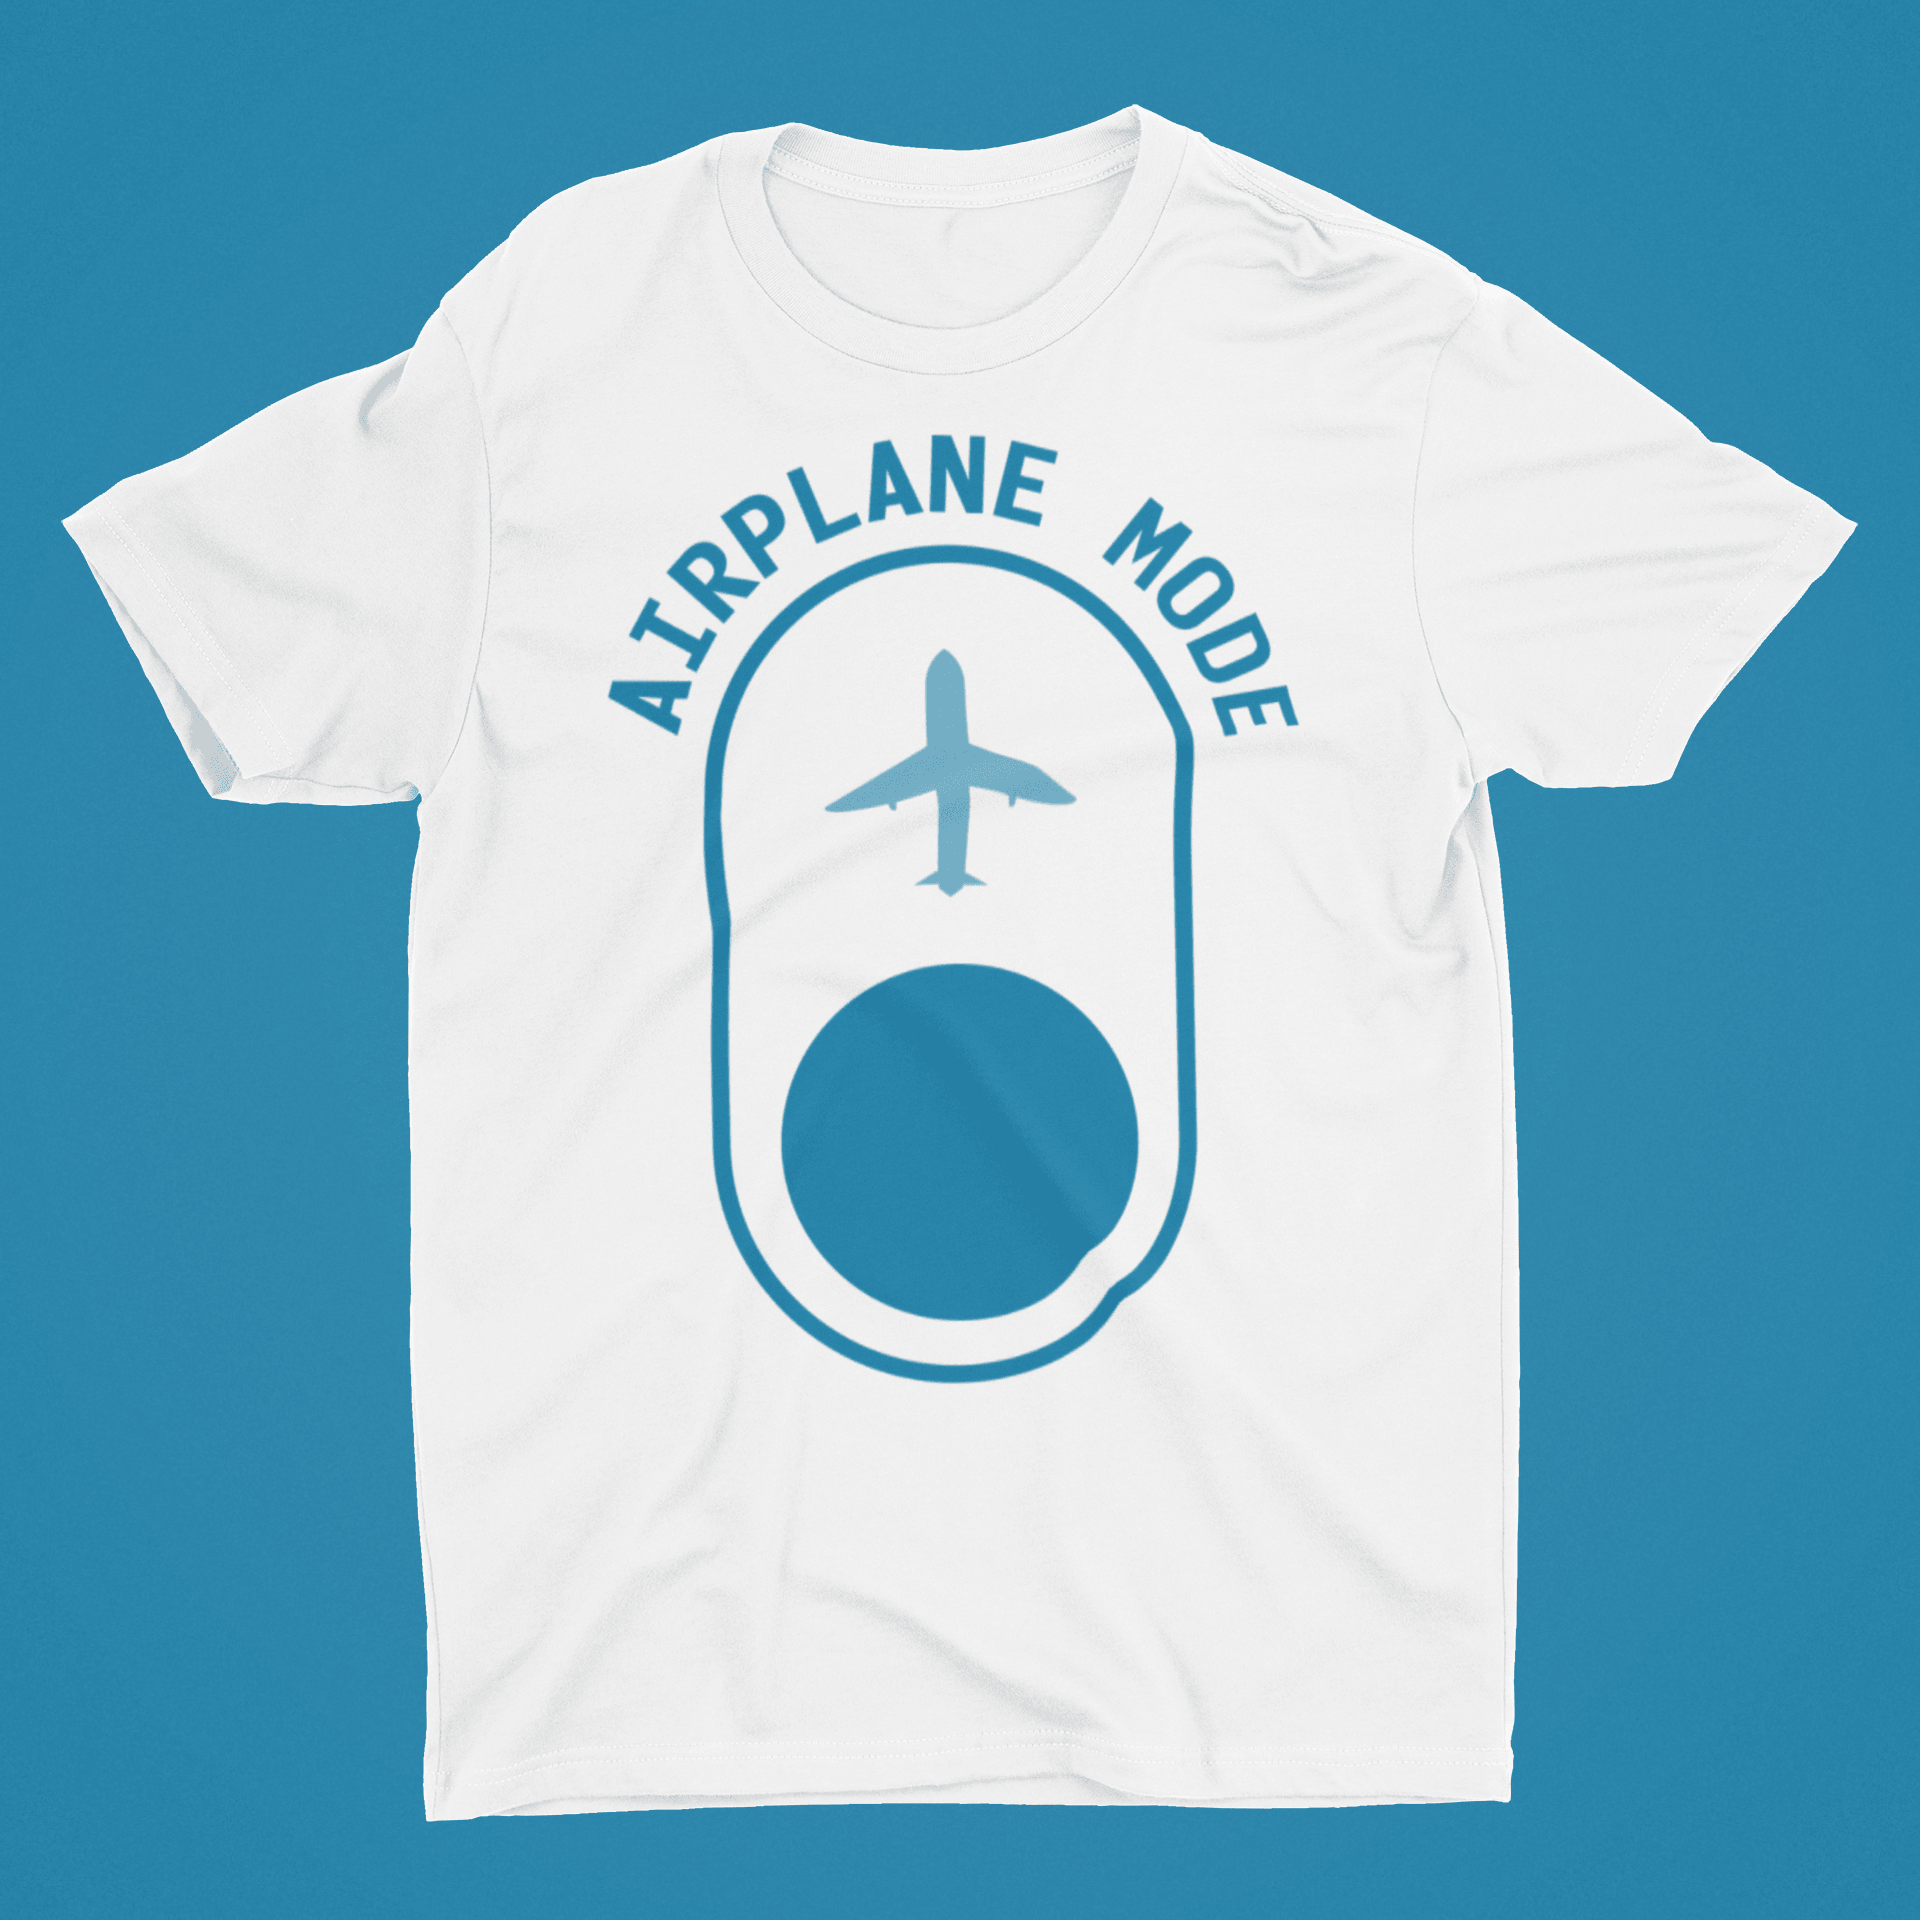 Airplane Mode White T-Shirt For Men - ATOM